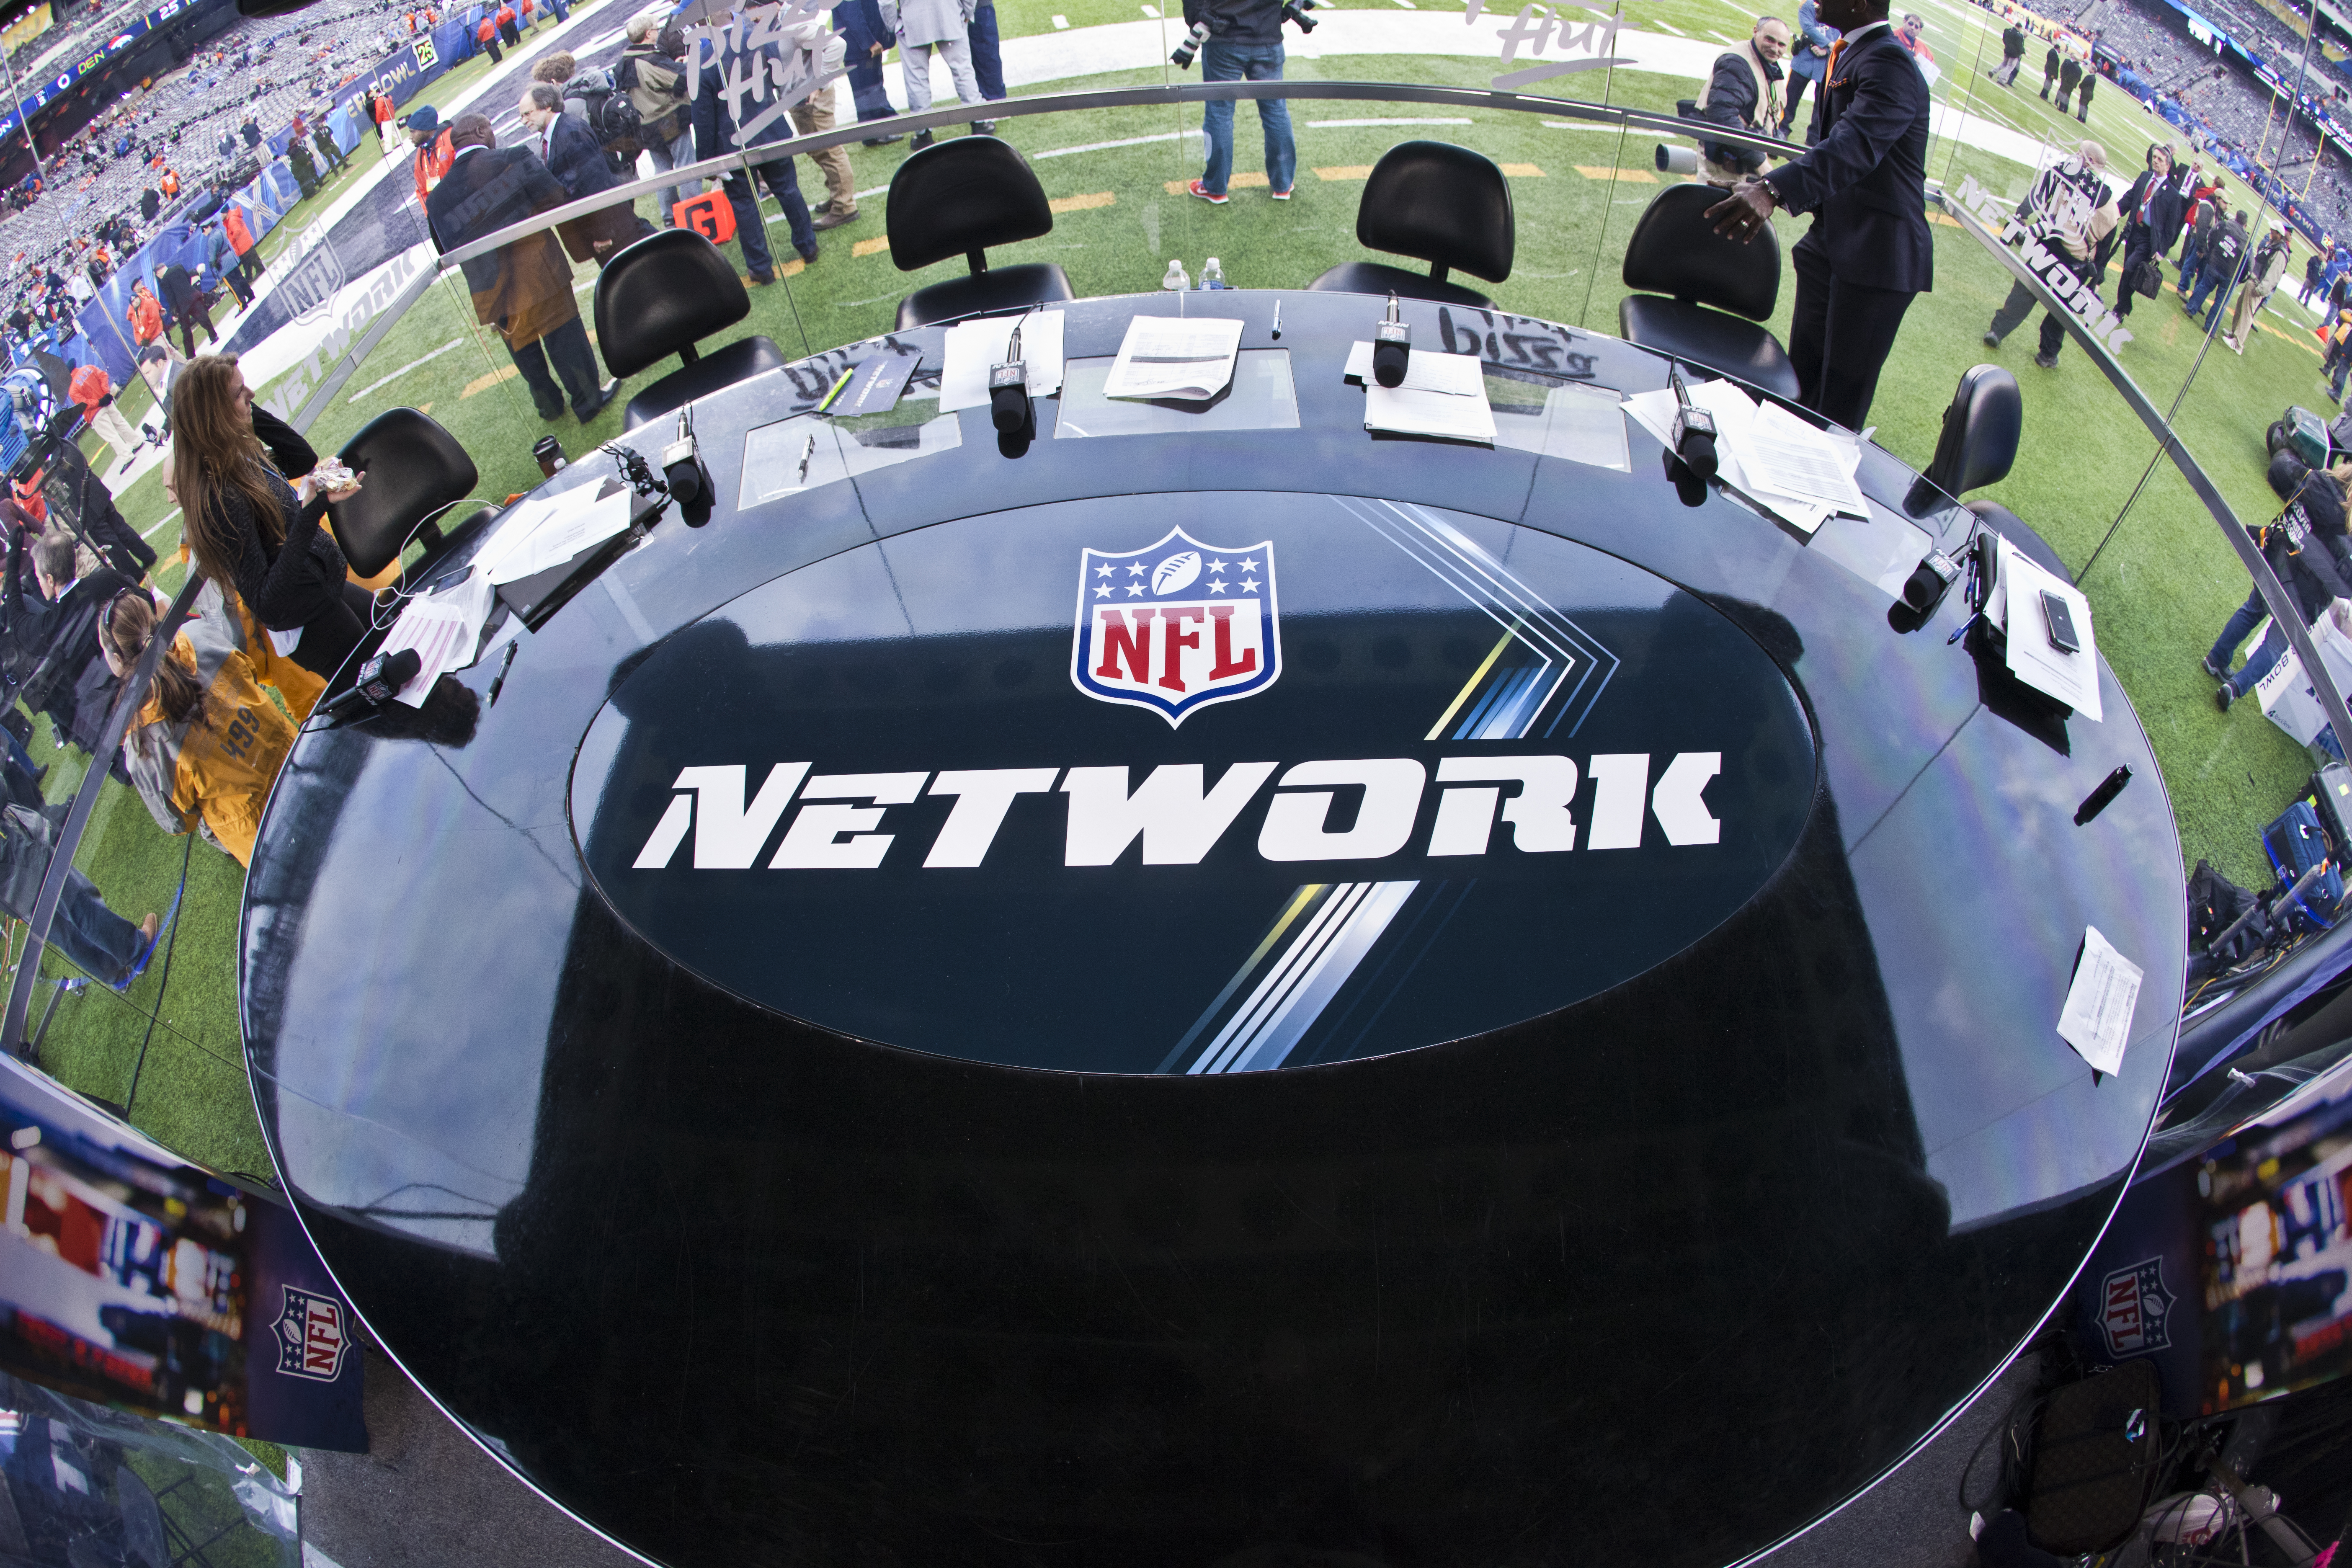 NFL Network - Wikipedia